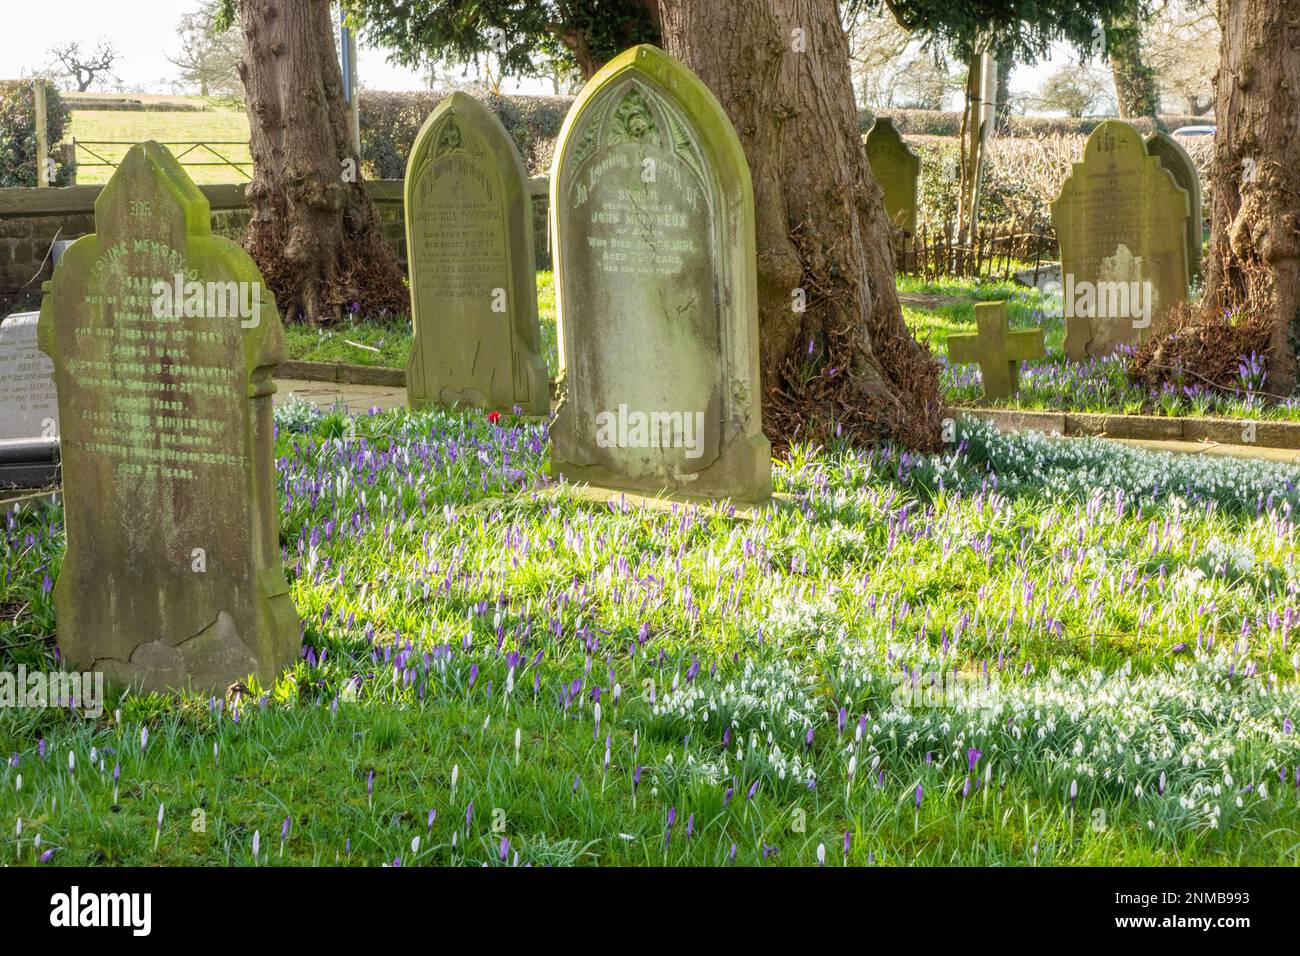 Crocus flowers growing in the church yard amongst the gravestones in   Saint John the Baptist Parish Church of Smallwood Cheshire England Stock Photo